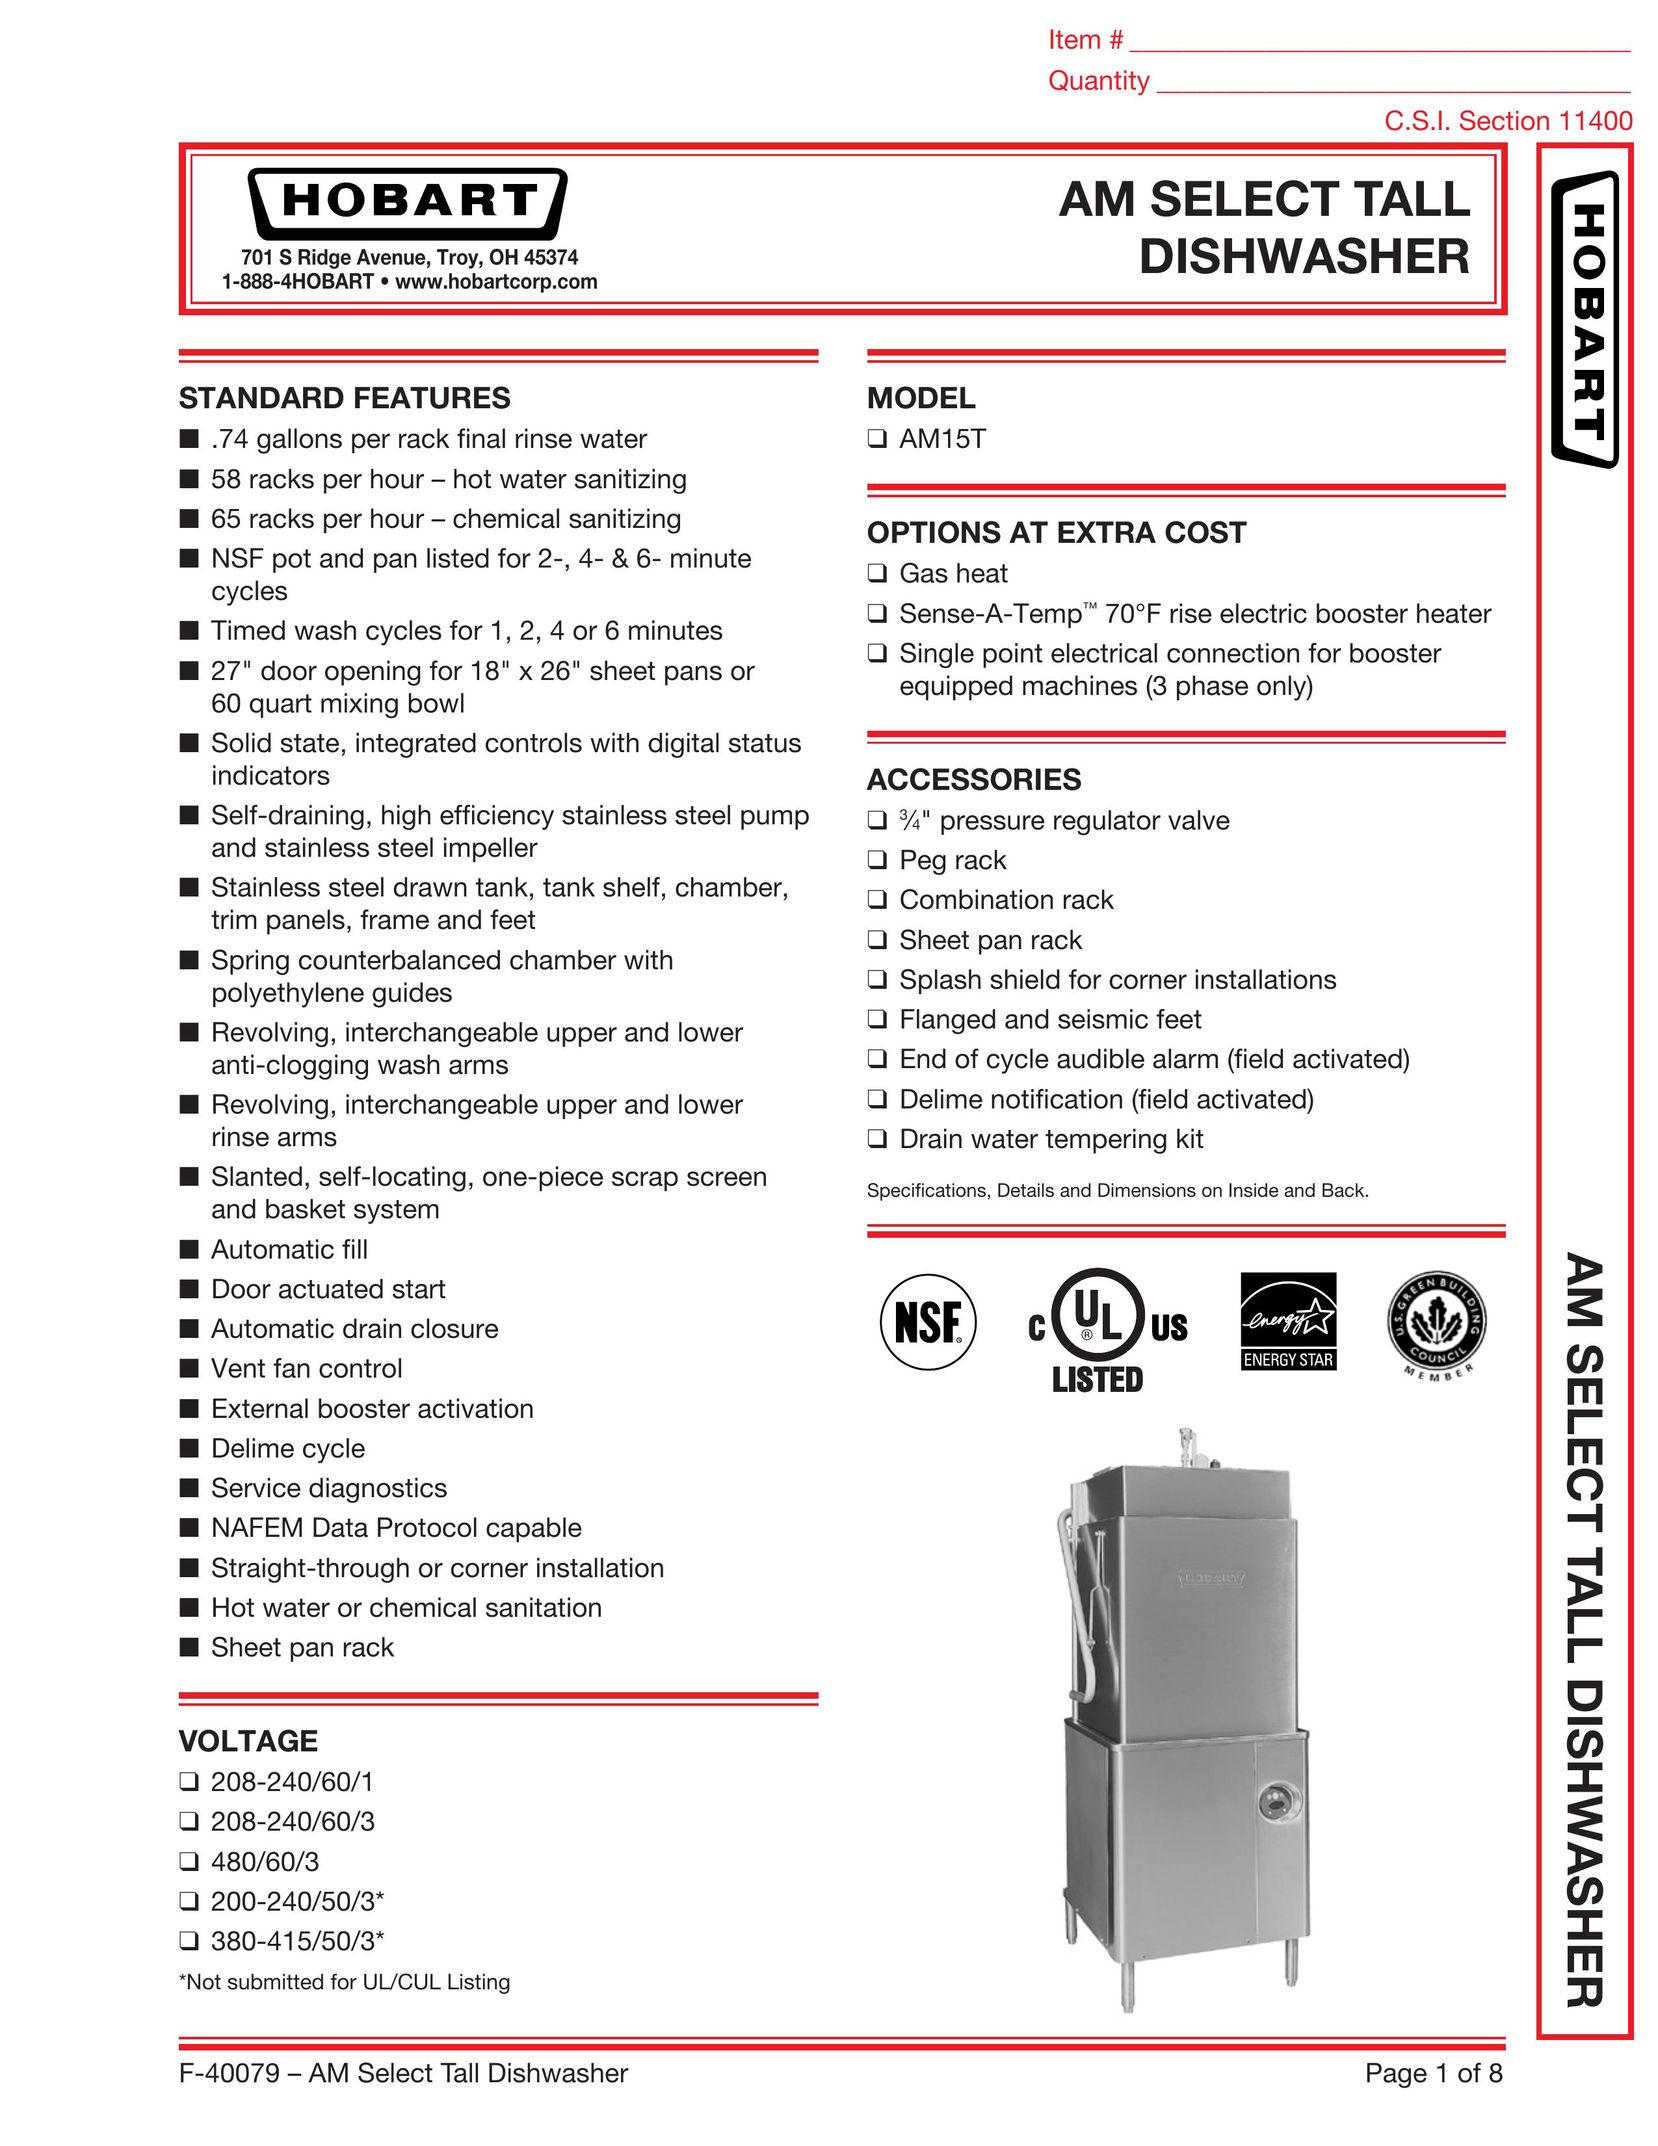 Hobart 480/60/3 Dishwasher User Manual